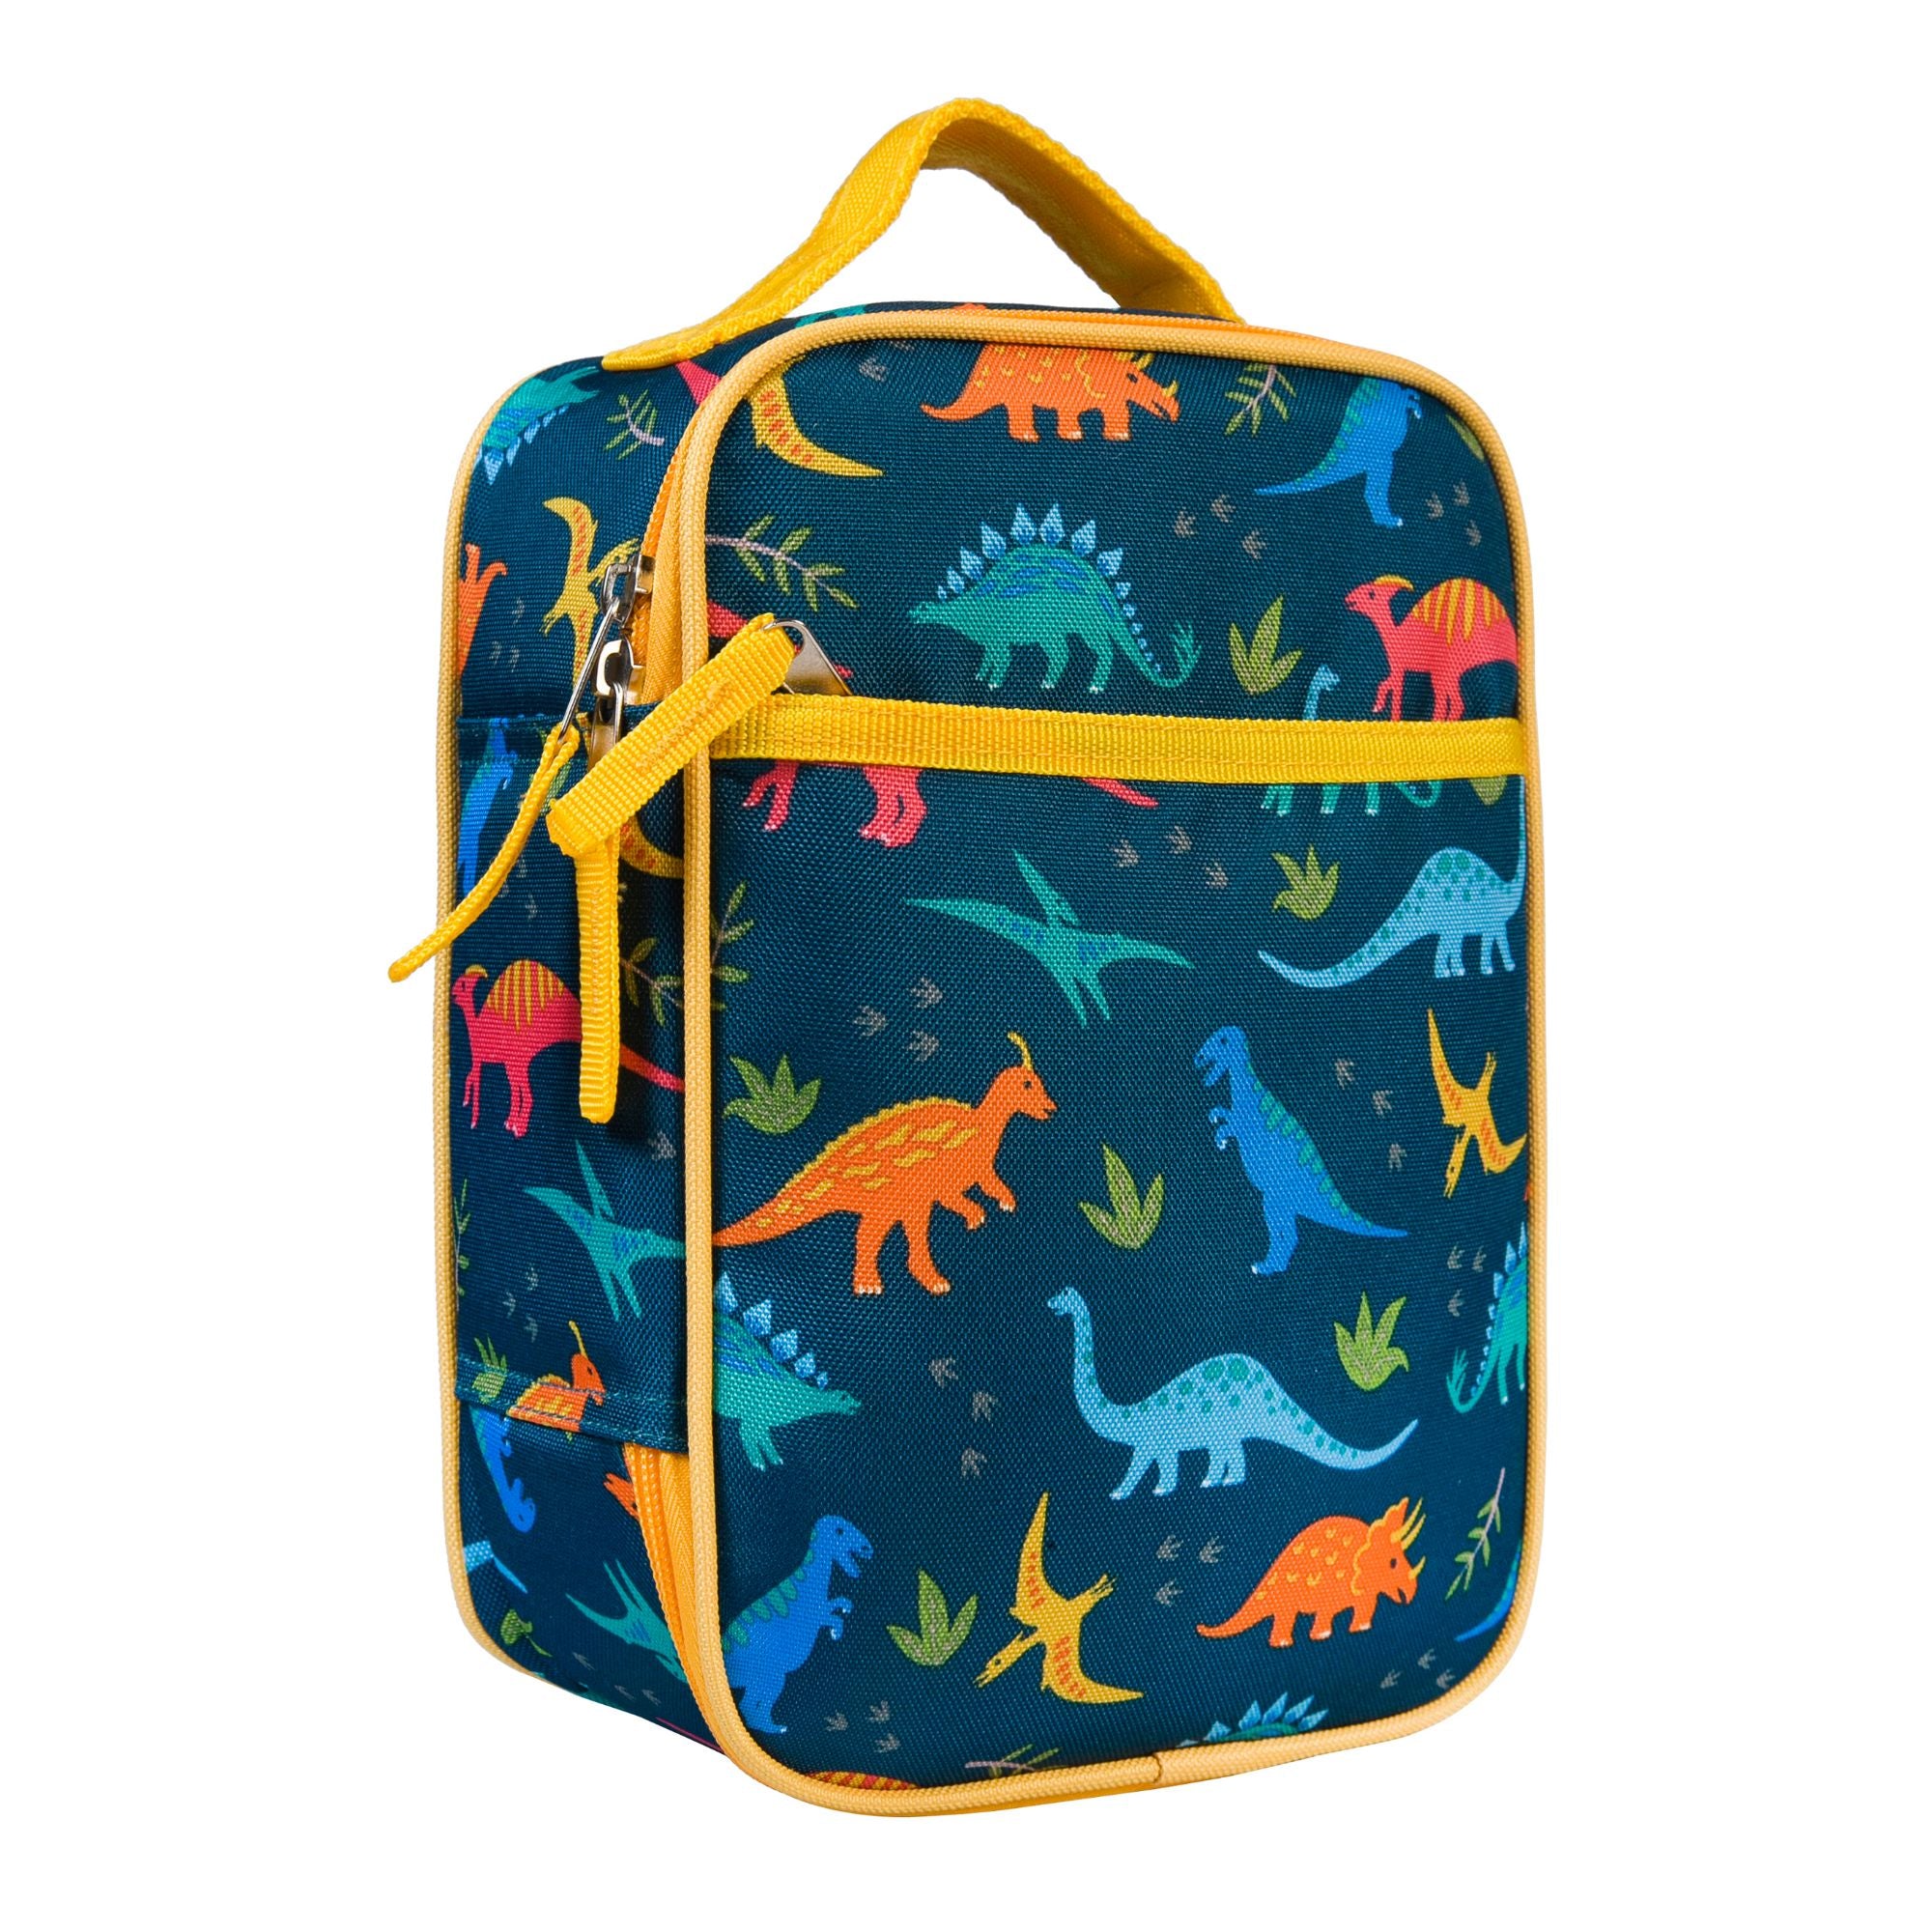 Wildkin Kids Insulated Lunch Box Bag (Jurassic Dinosaurs)